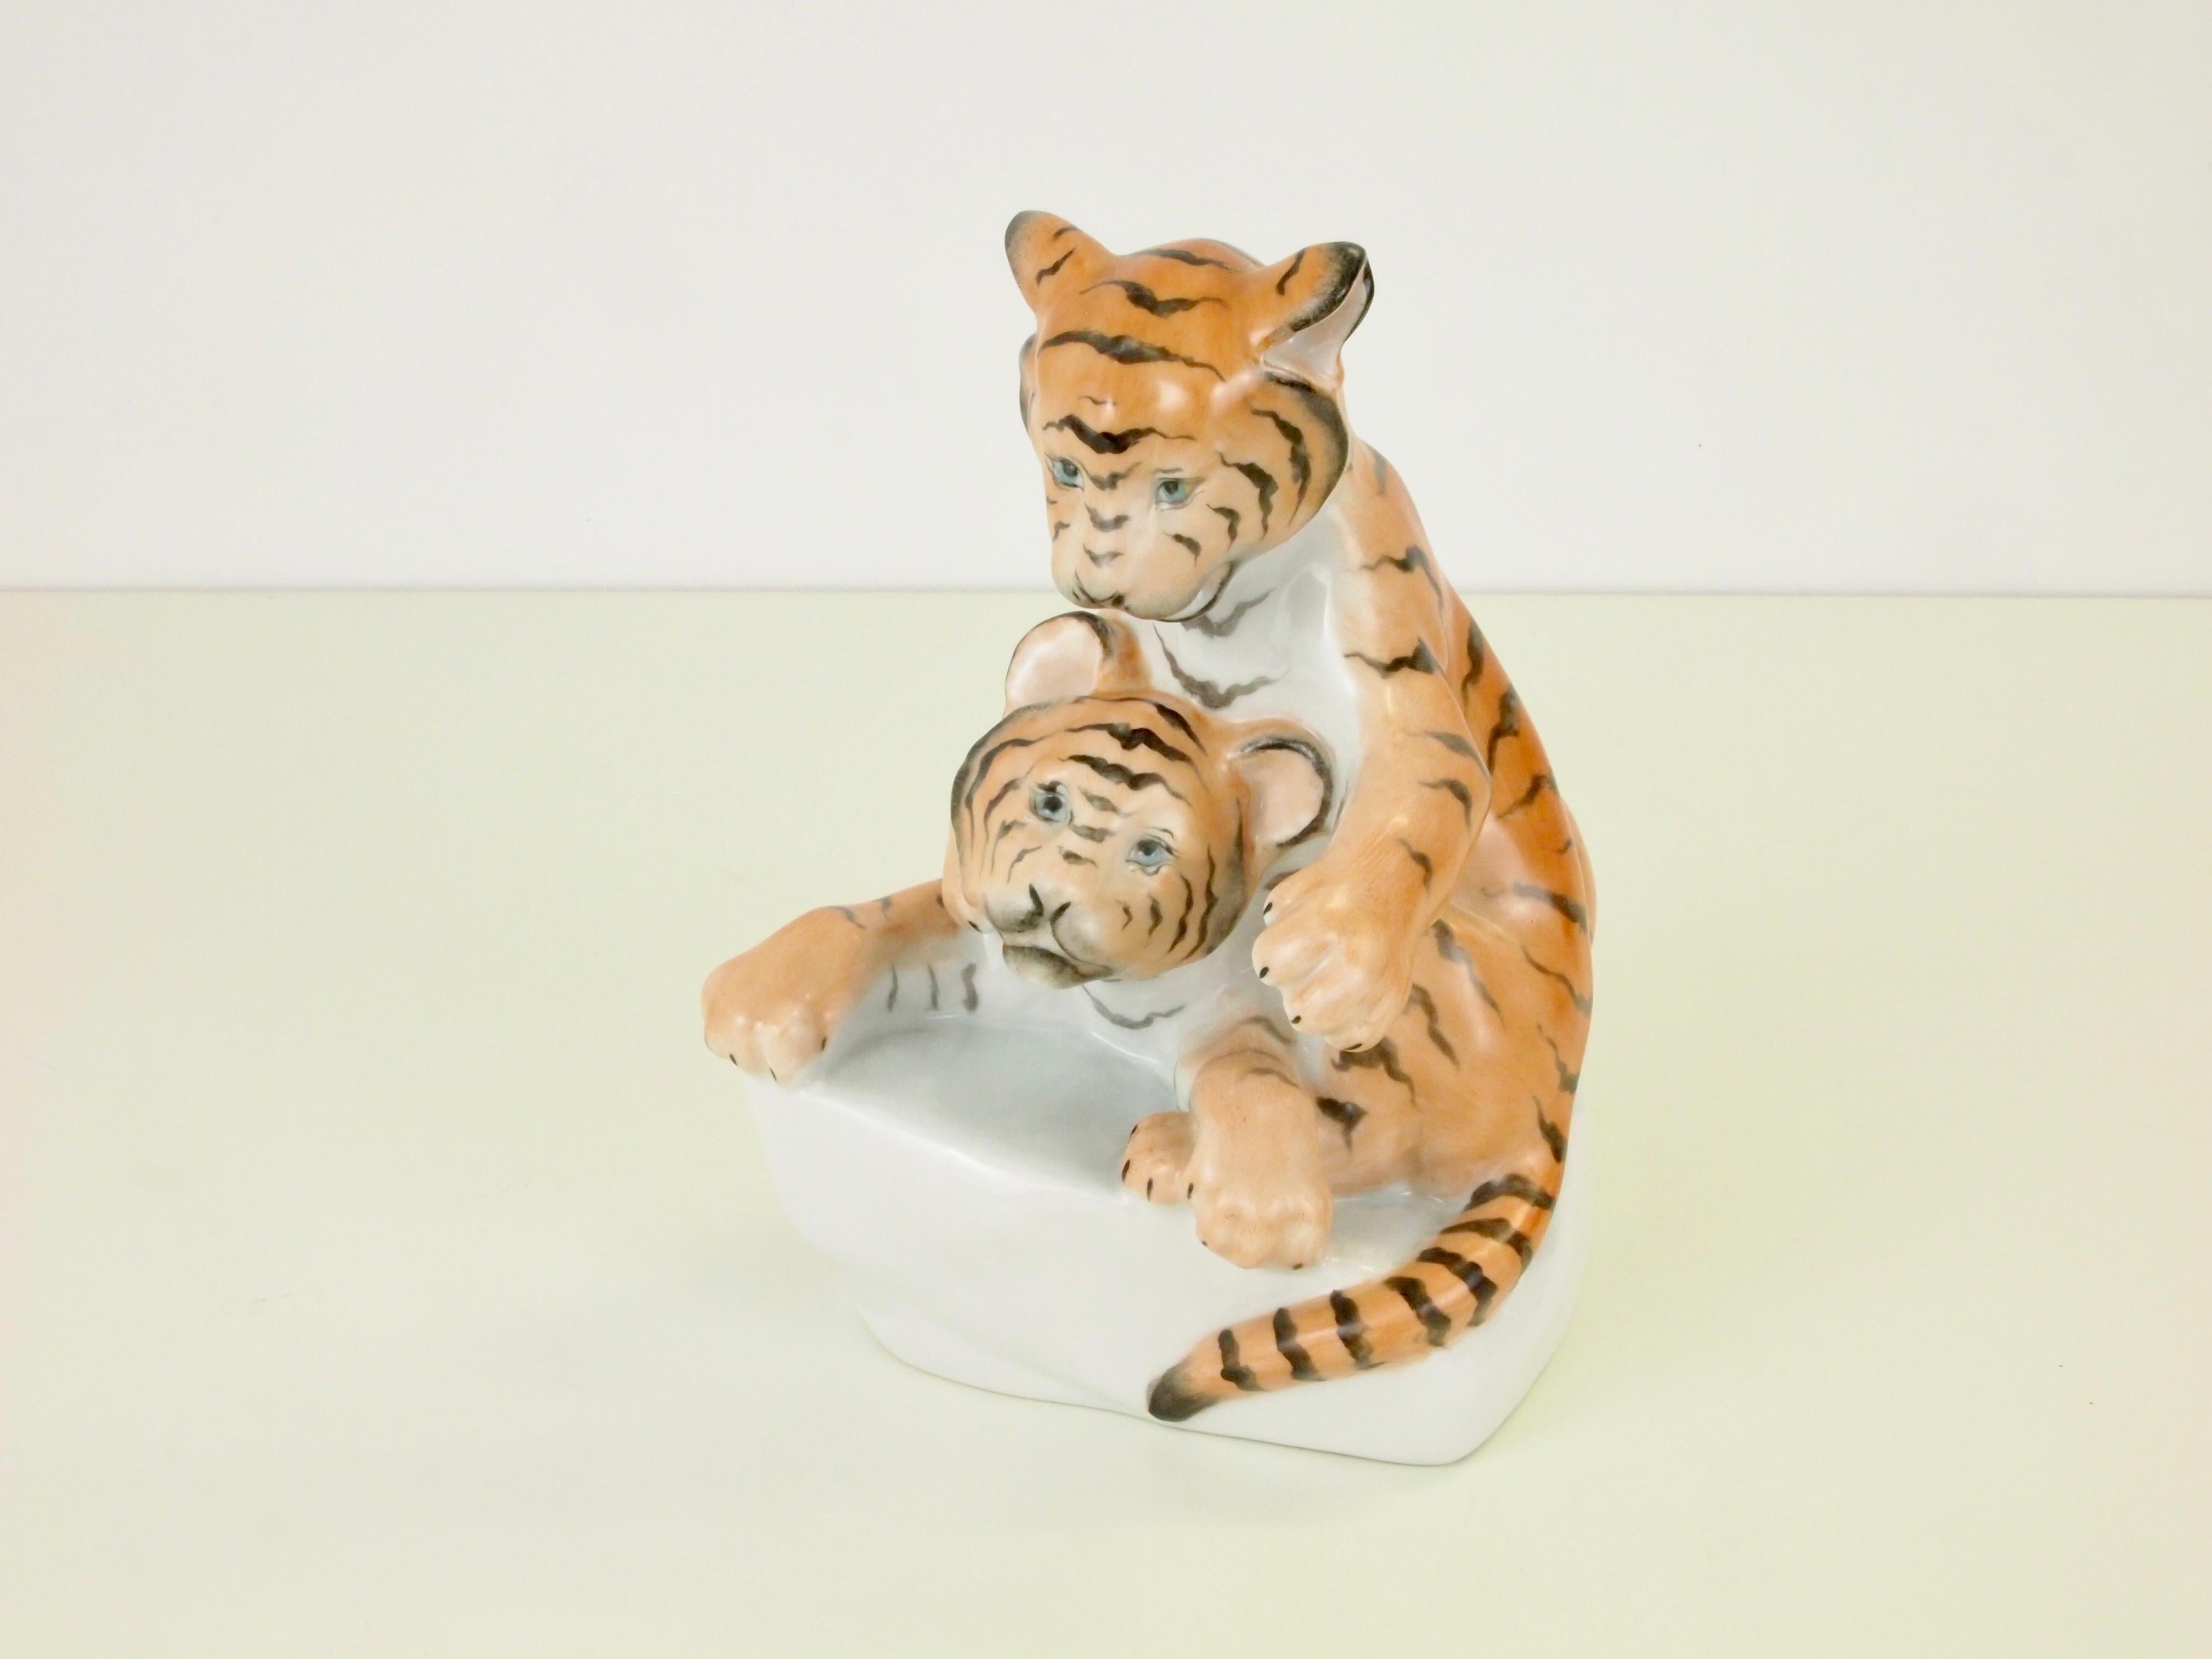 Hand-Painted Herend Porcelain Figurine Depicting 2 Tiger Cubs For Sale